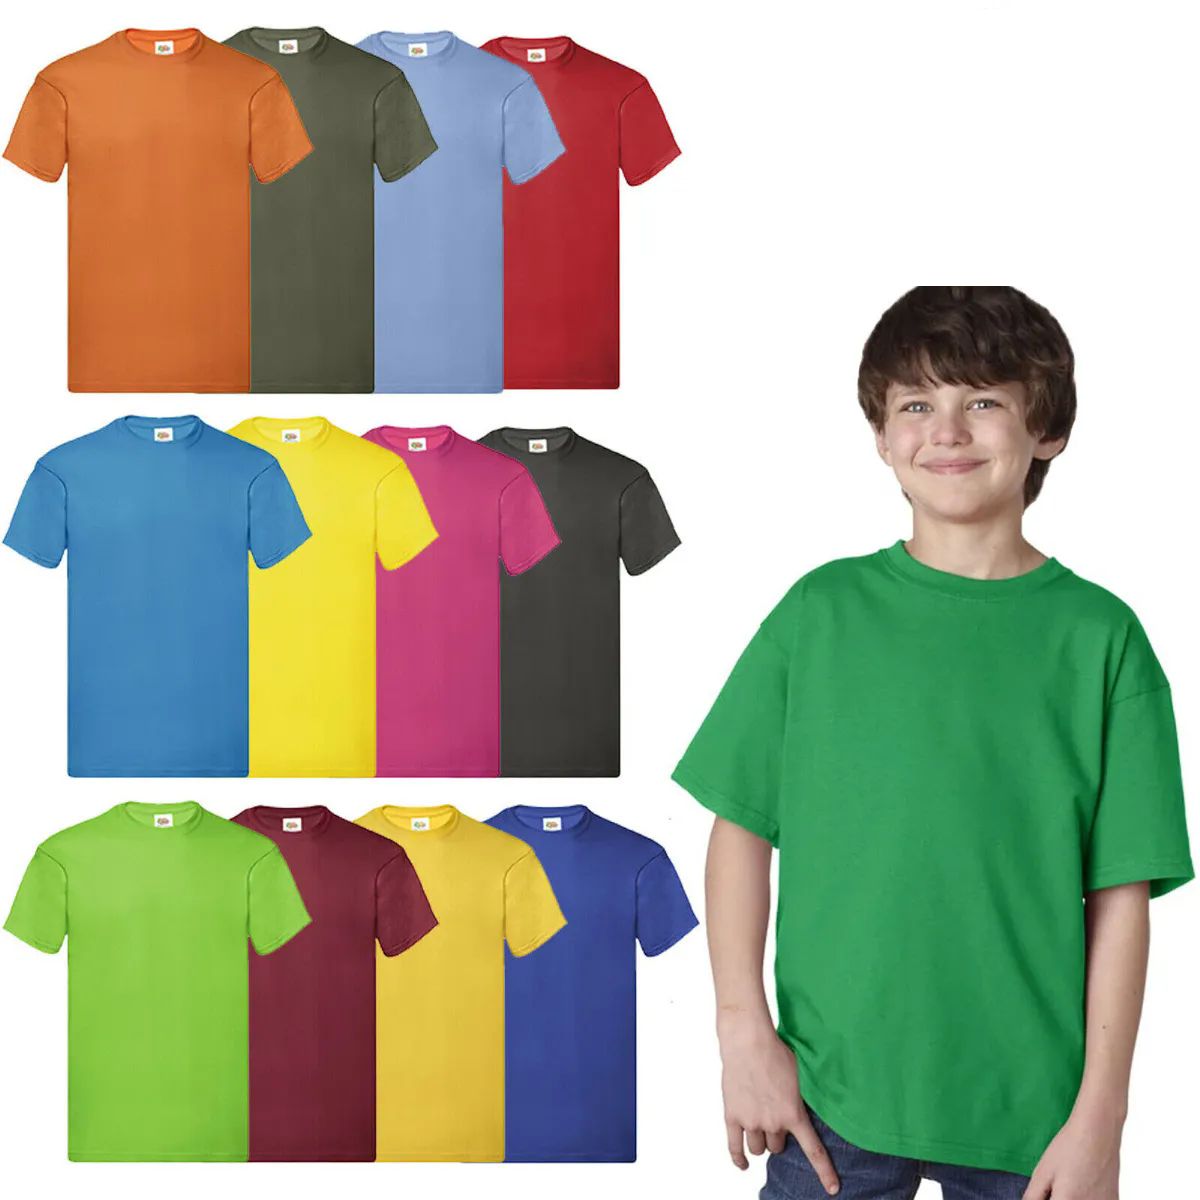 360 Wholesale Billion Hats Kids Youth Cotton Assorted Colors T Shirts Size xs